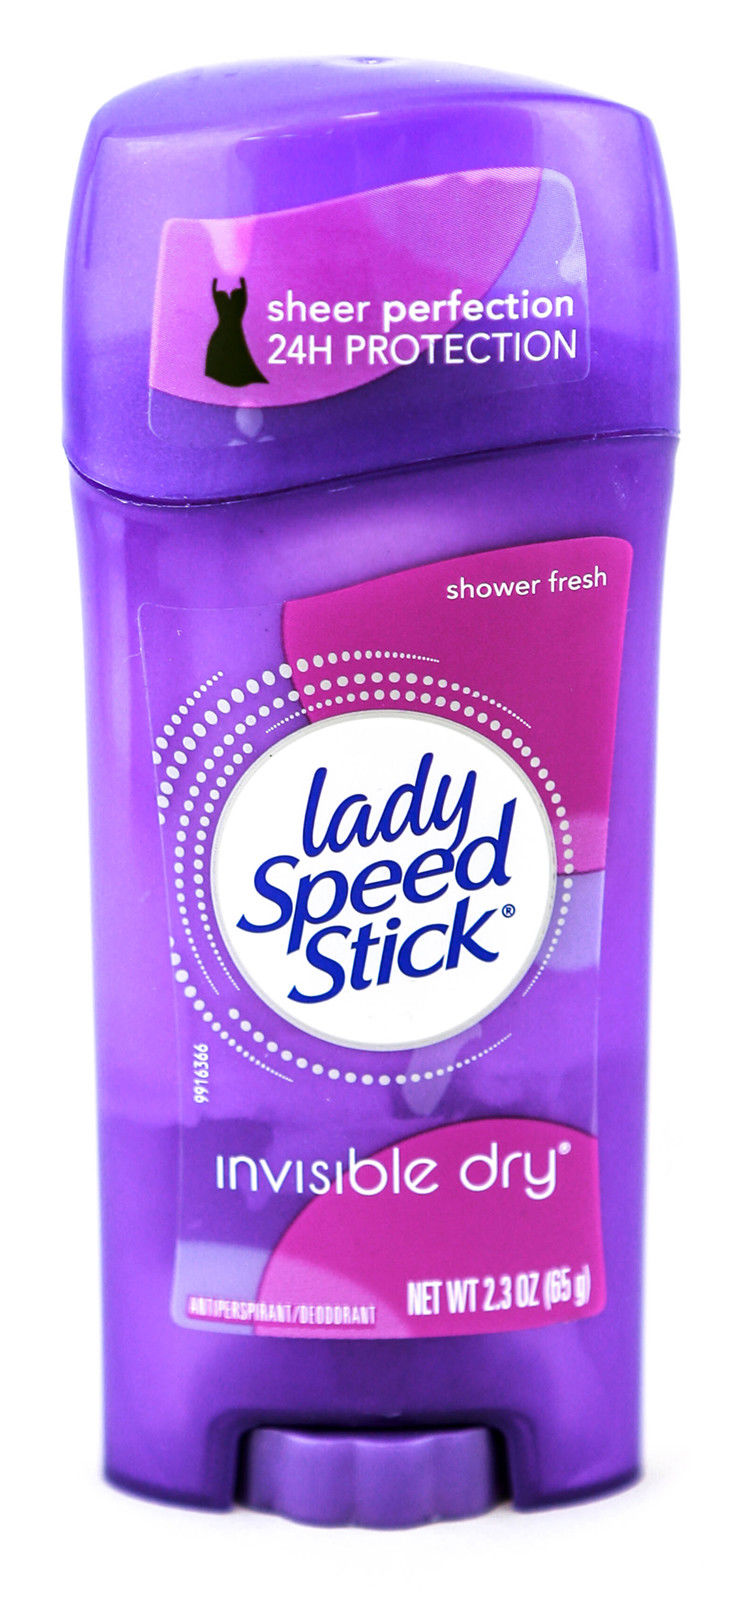 Lady Speed Stick Antiperspirant Deodorant Invisible Dry, Shower Fresh